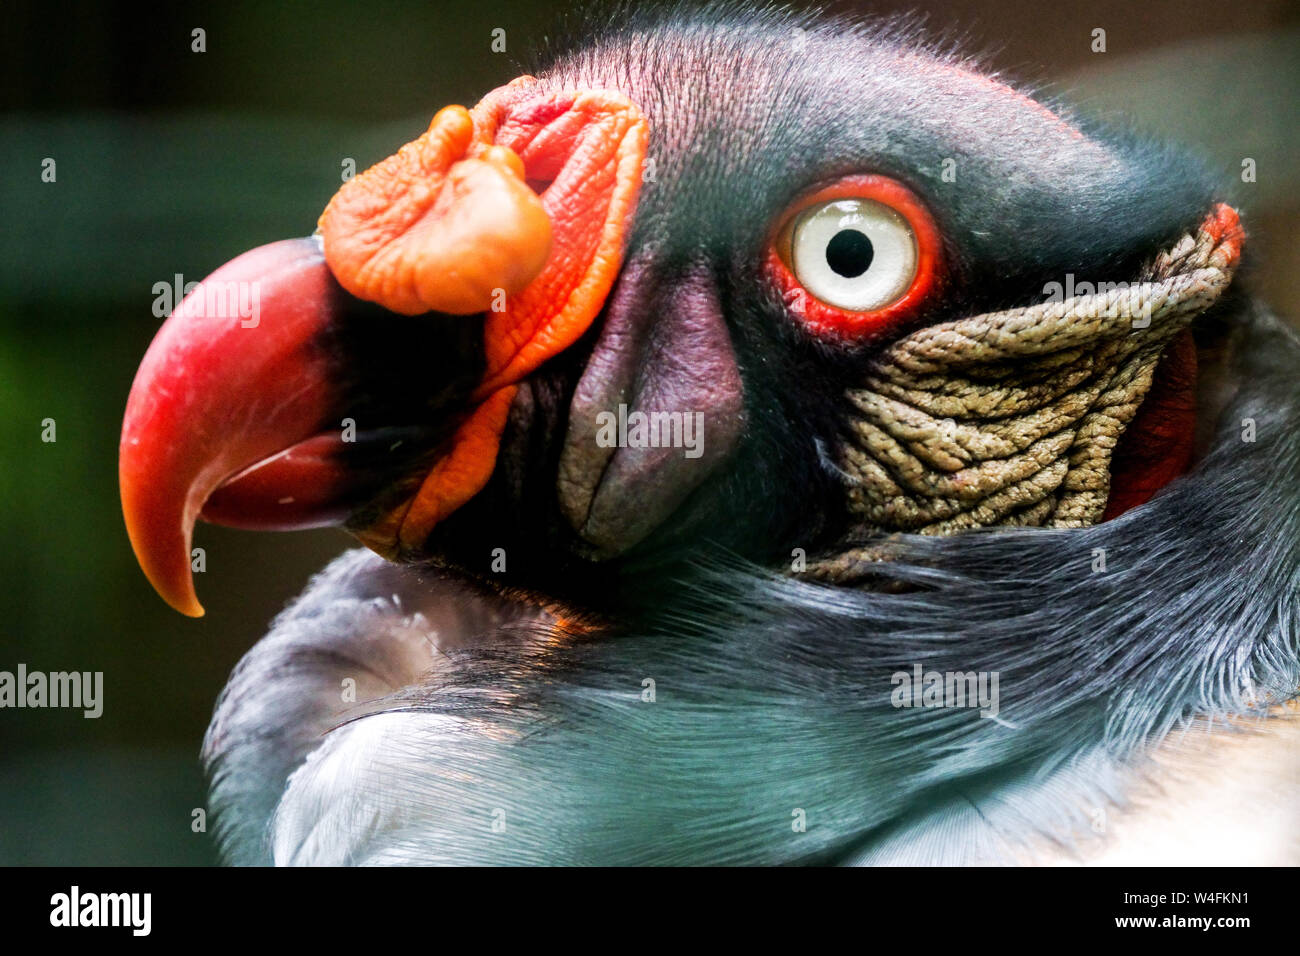 King vulture, Sarcoramphus papa, detail of head with beak Stock Photo